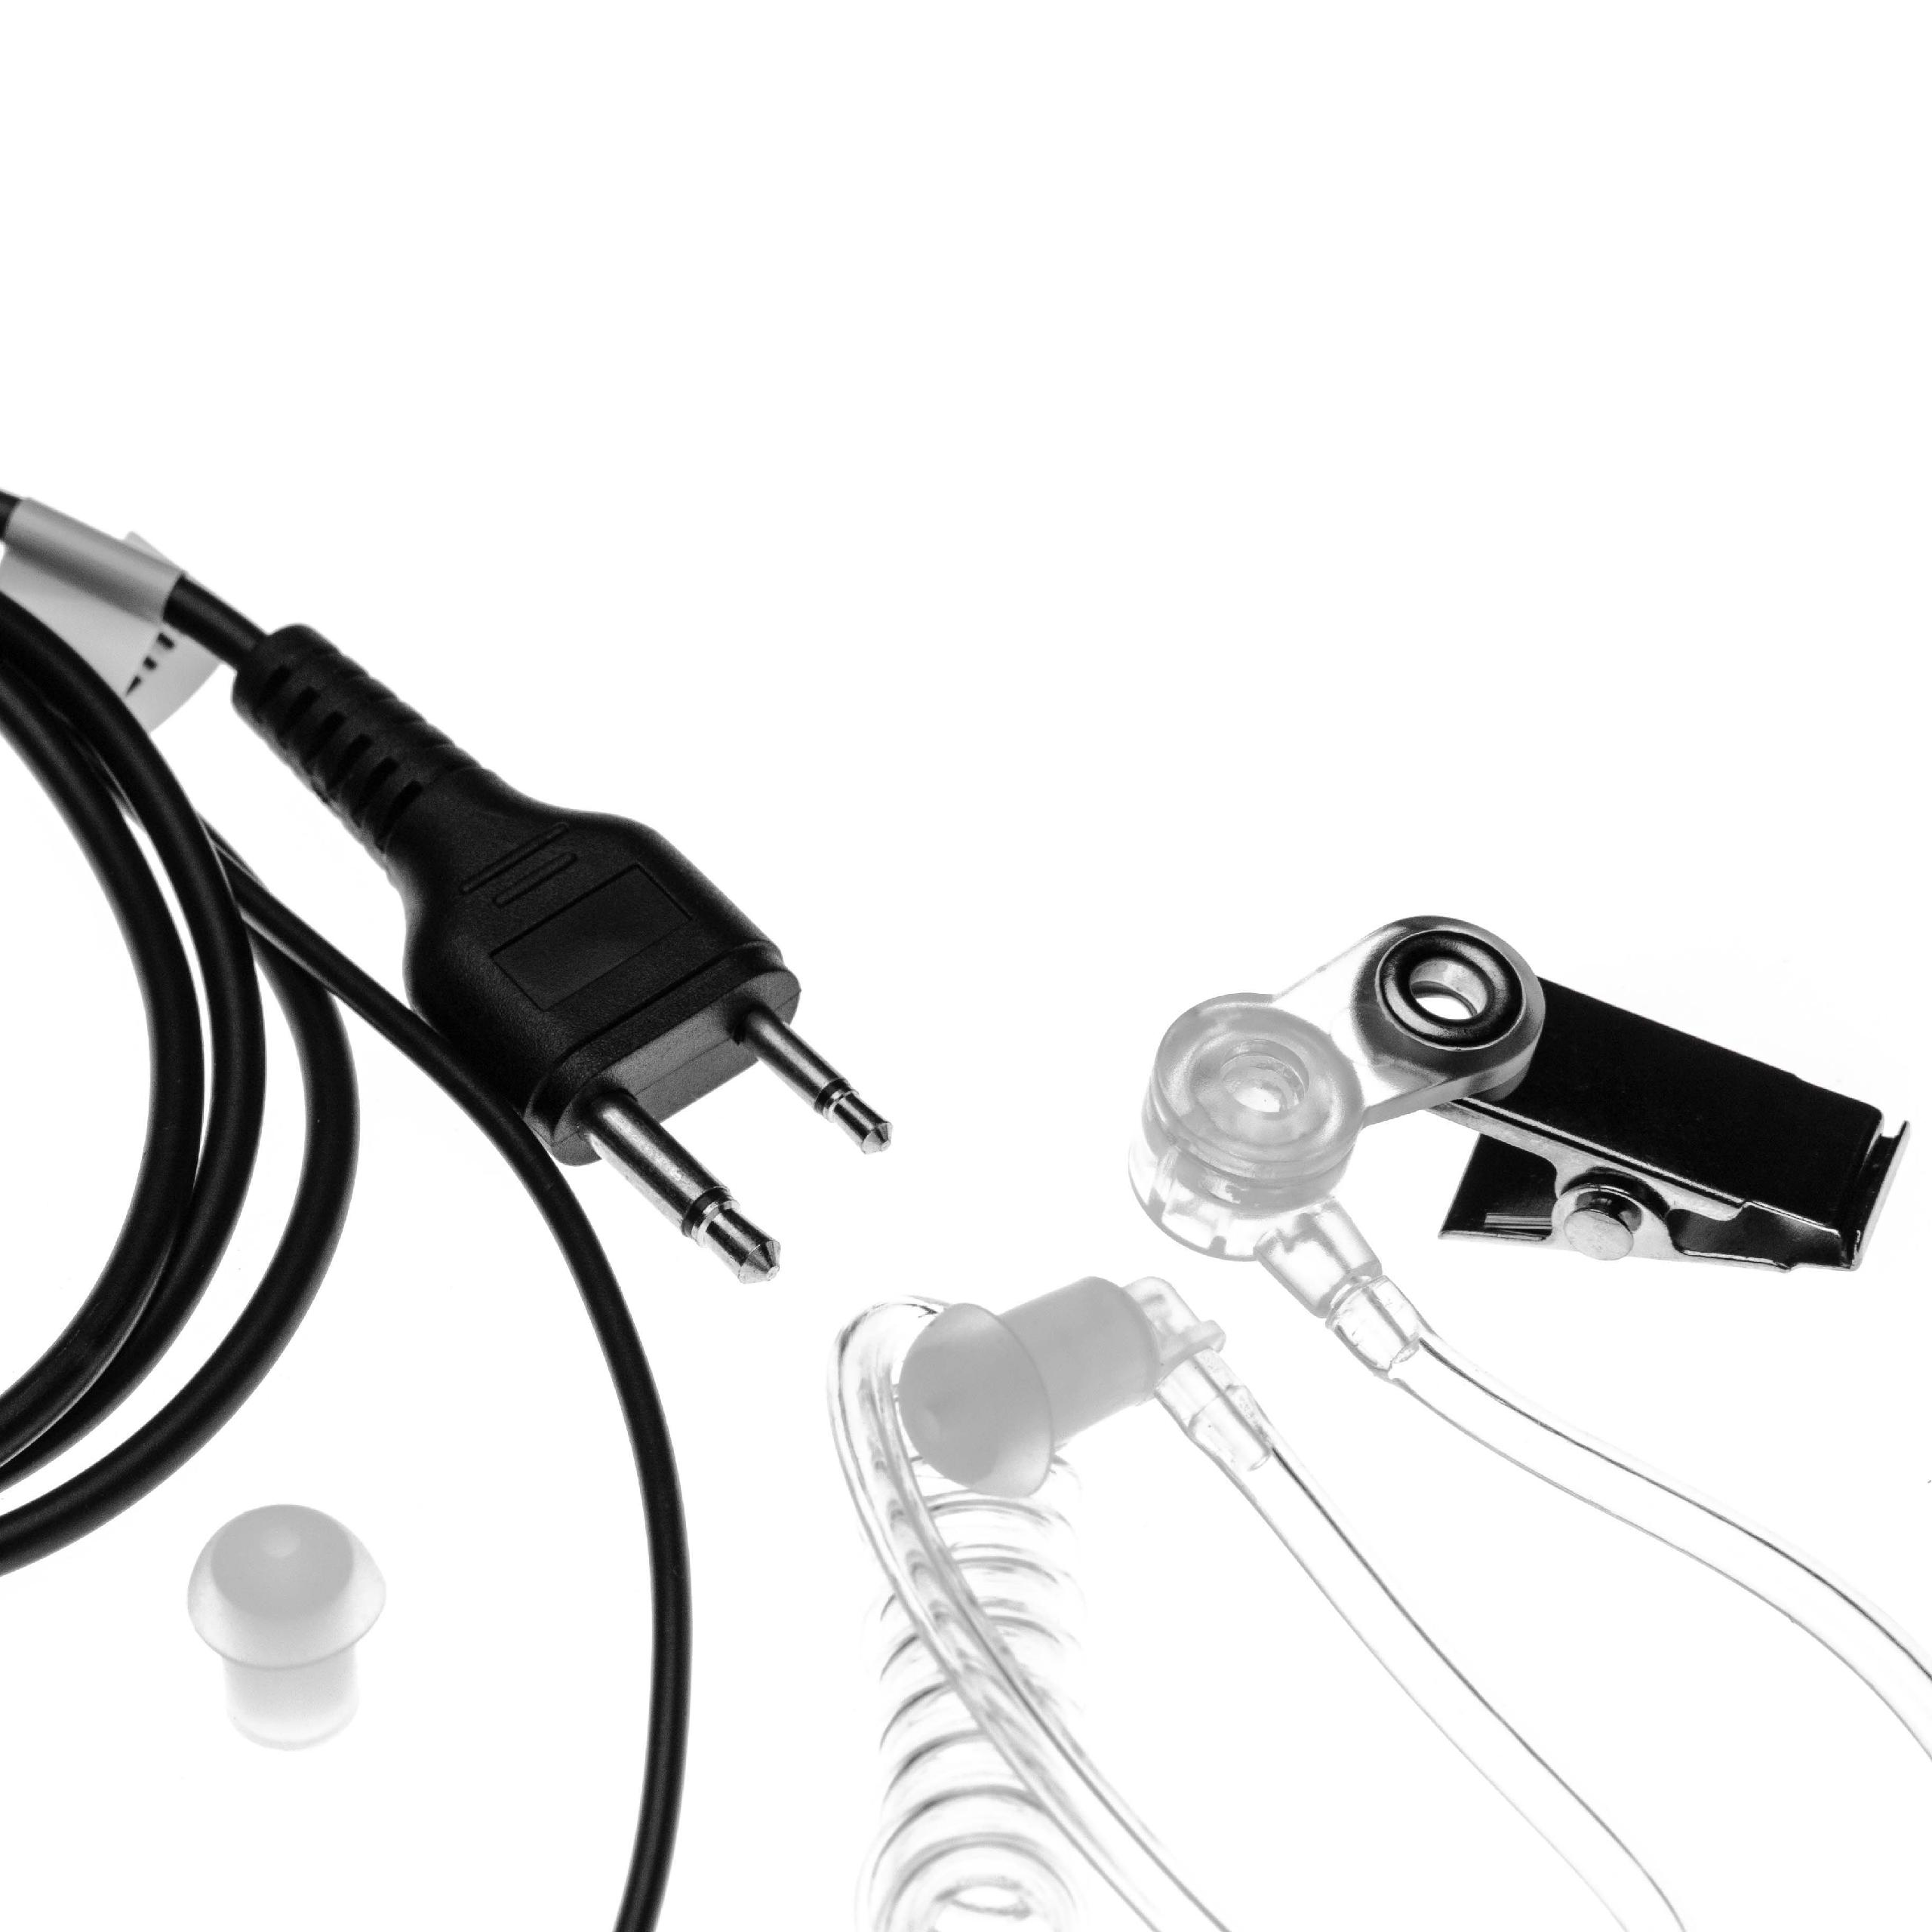 VHBW kompatibel mit Icom Headset / schwarz IC-E91, IC-A4E, IC-A21, IC-E90, transparent On-ear IC-A22, IC-A3, IC-A22E, IC-A4, IC-A3E, IC-F10